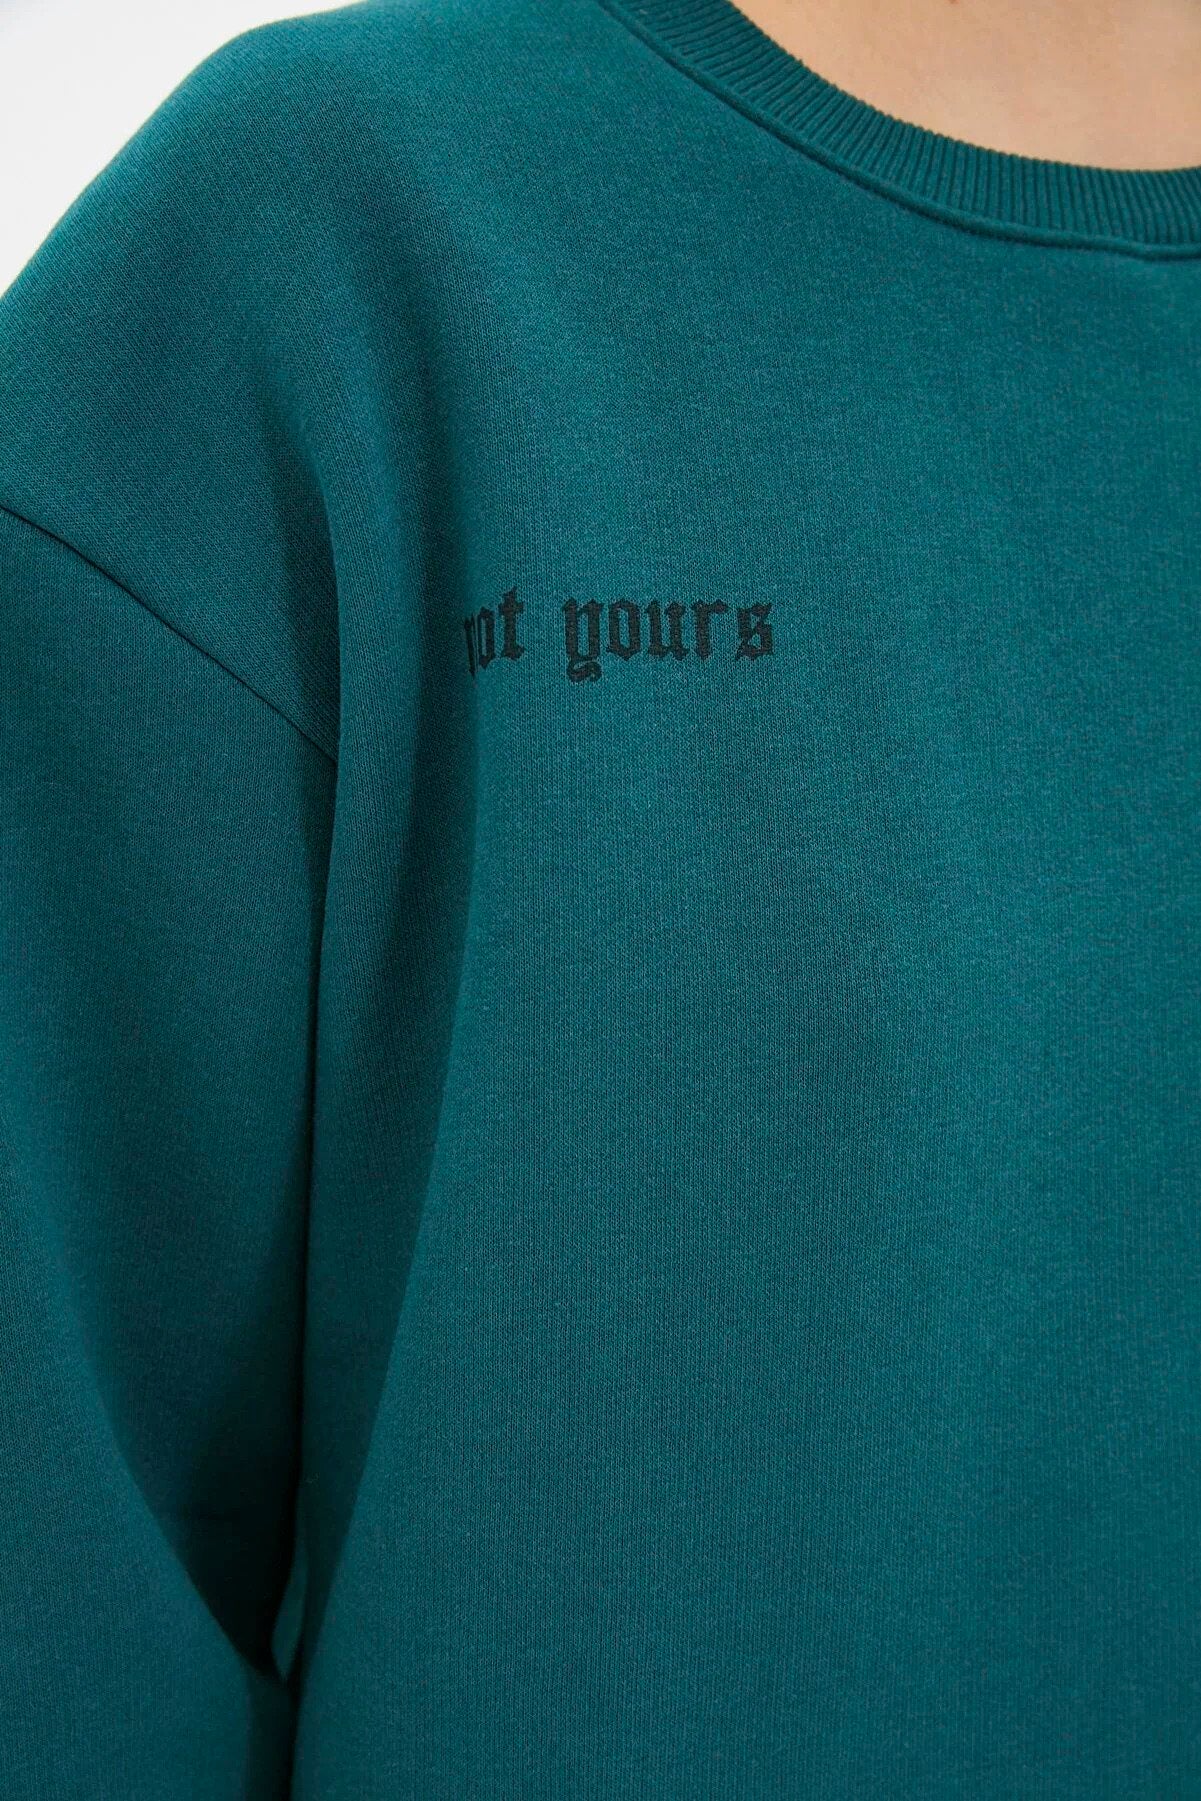 Trendyol “Not Yours” Designed Asymmetric Petrol Sweater